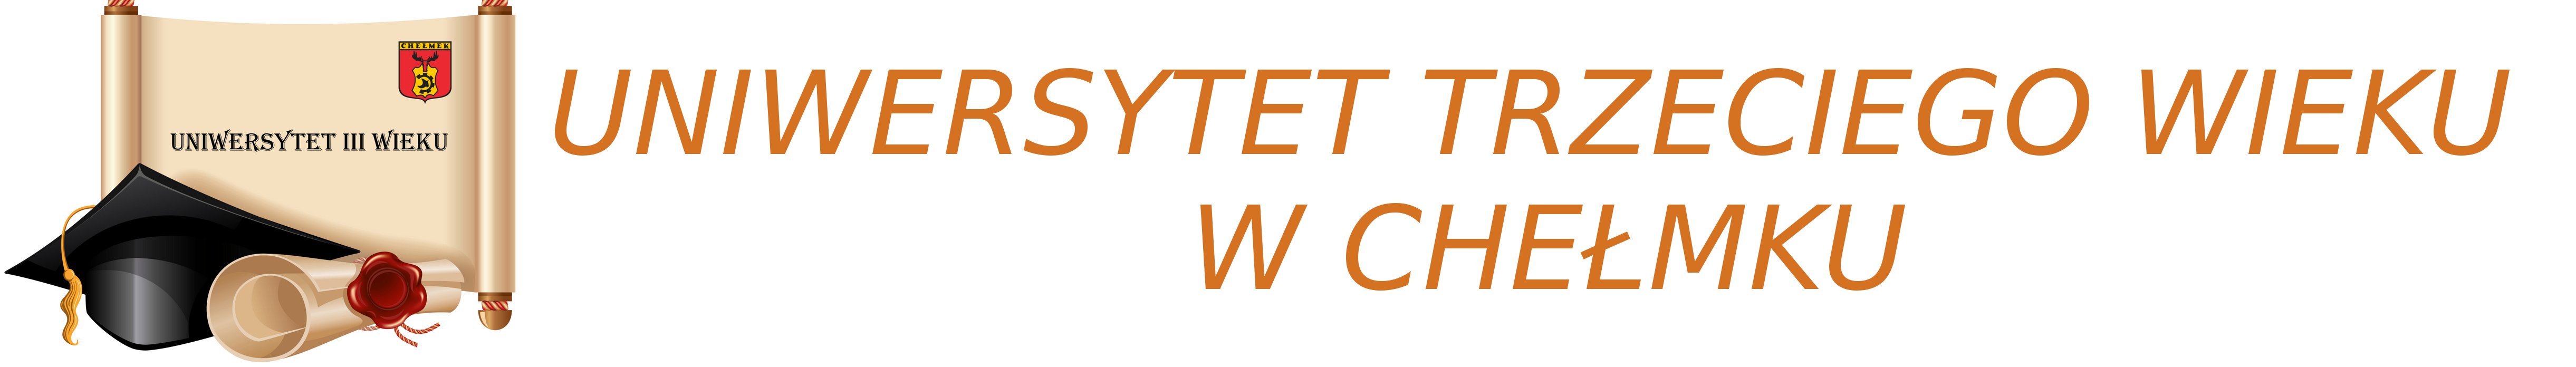 sutw chelmek logo